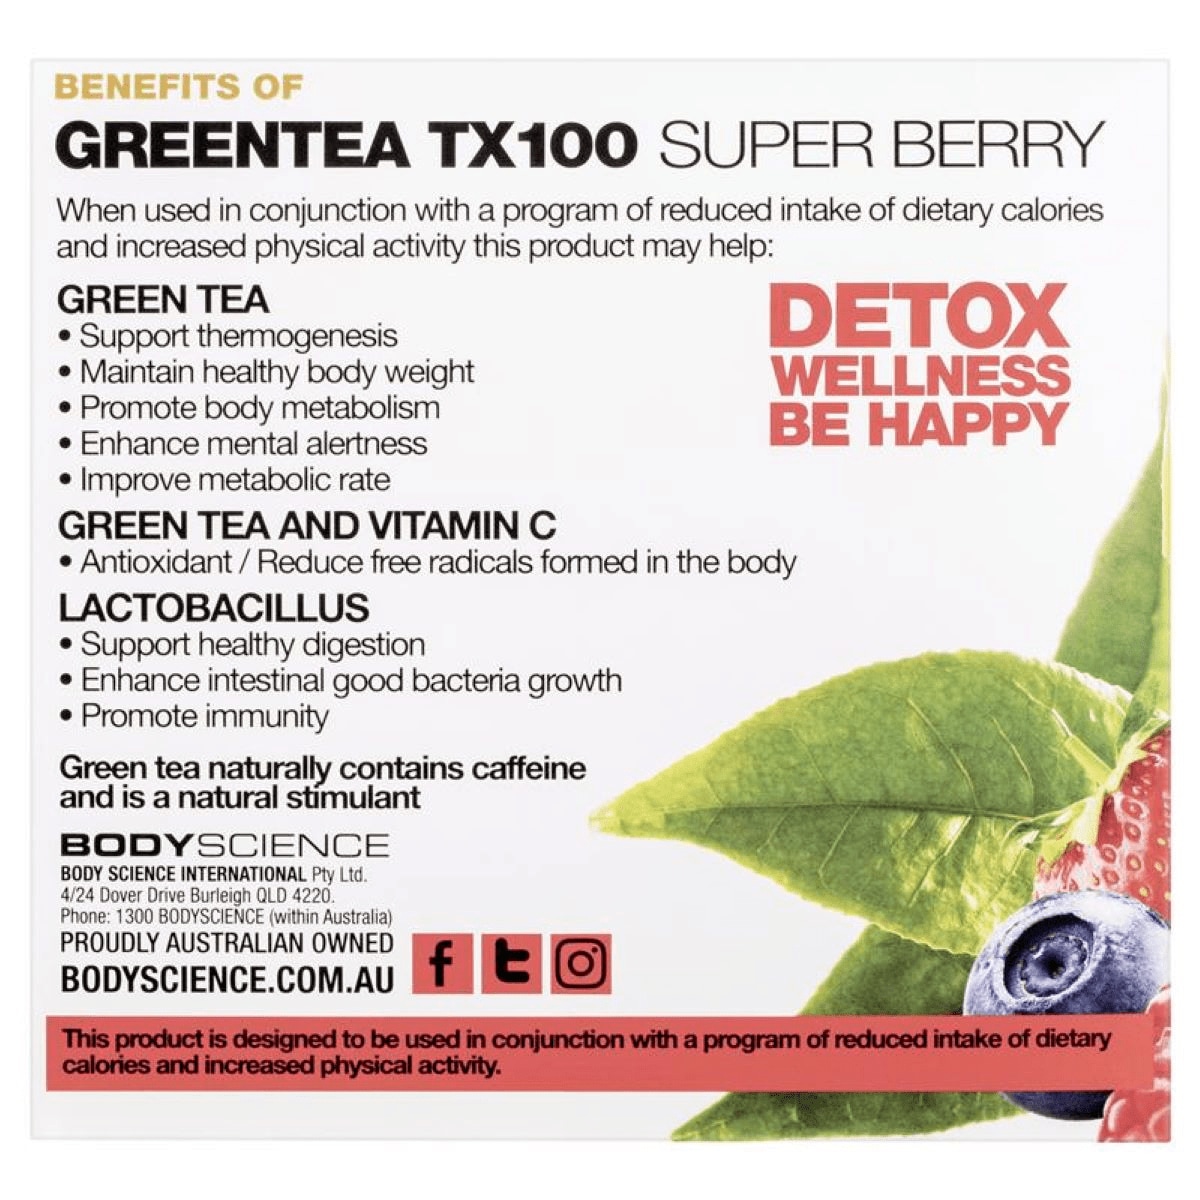 BSc Body Science Green Tea TX100 Super Berry 60 x 3g Sachets